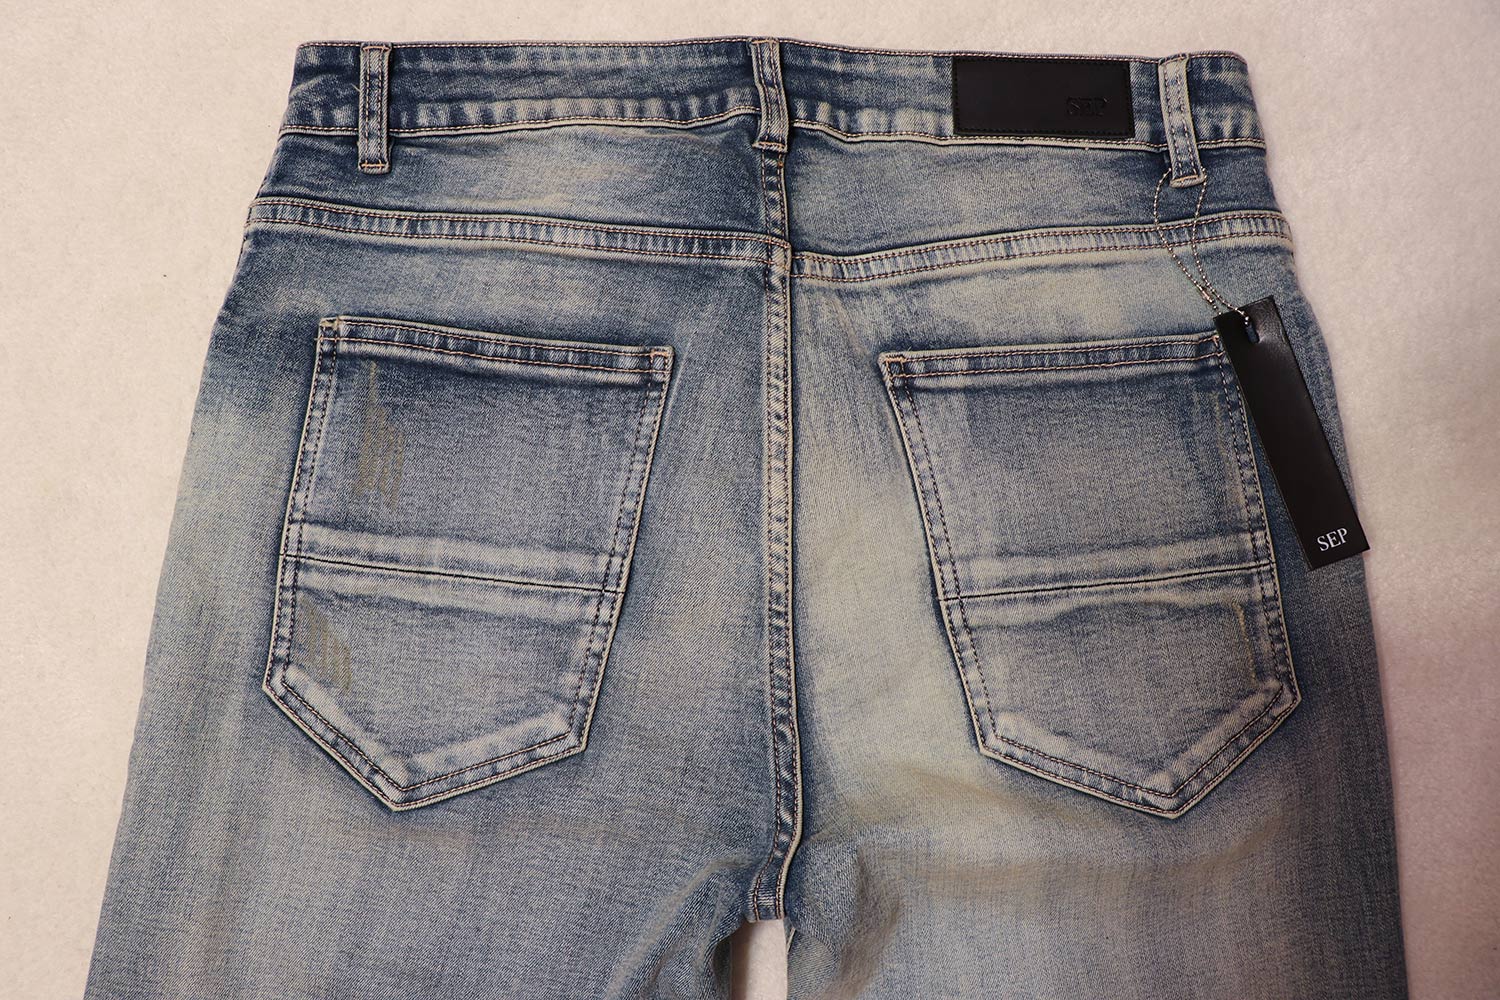 SEP Men’s Skinny Jeans Denim Review – THE JEANS BLOG